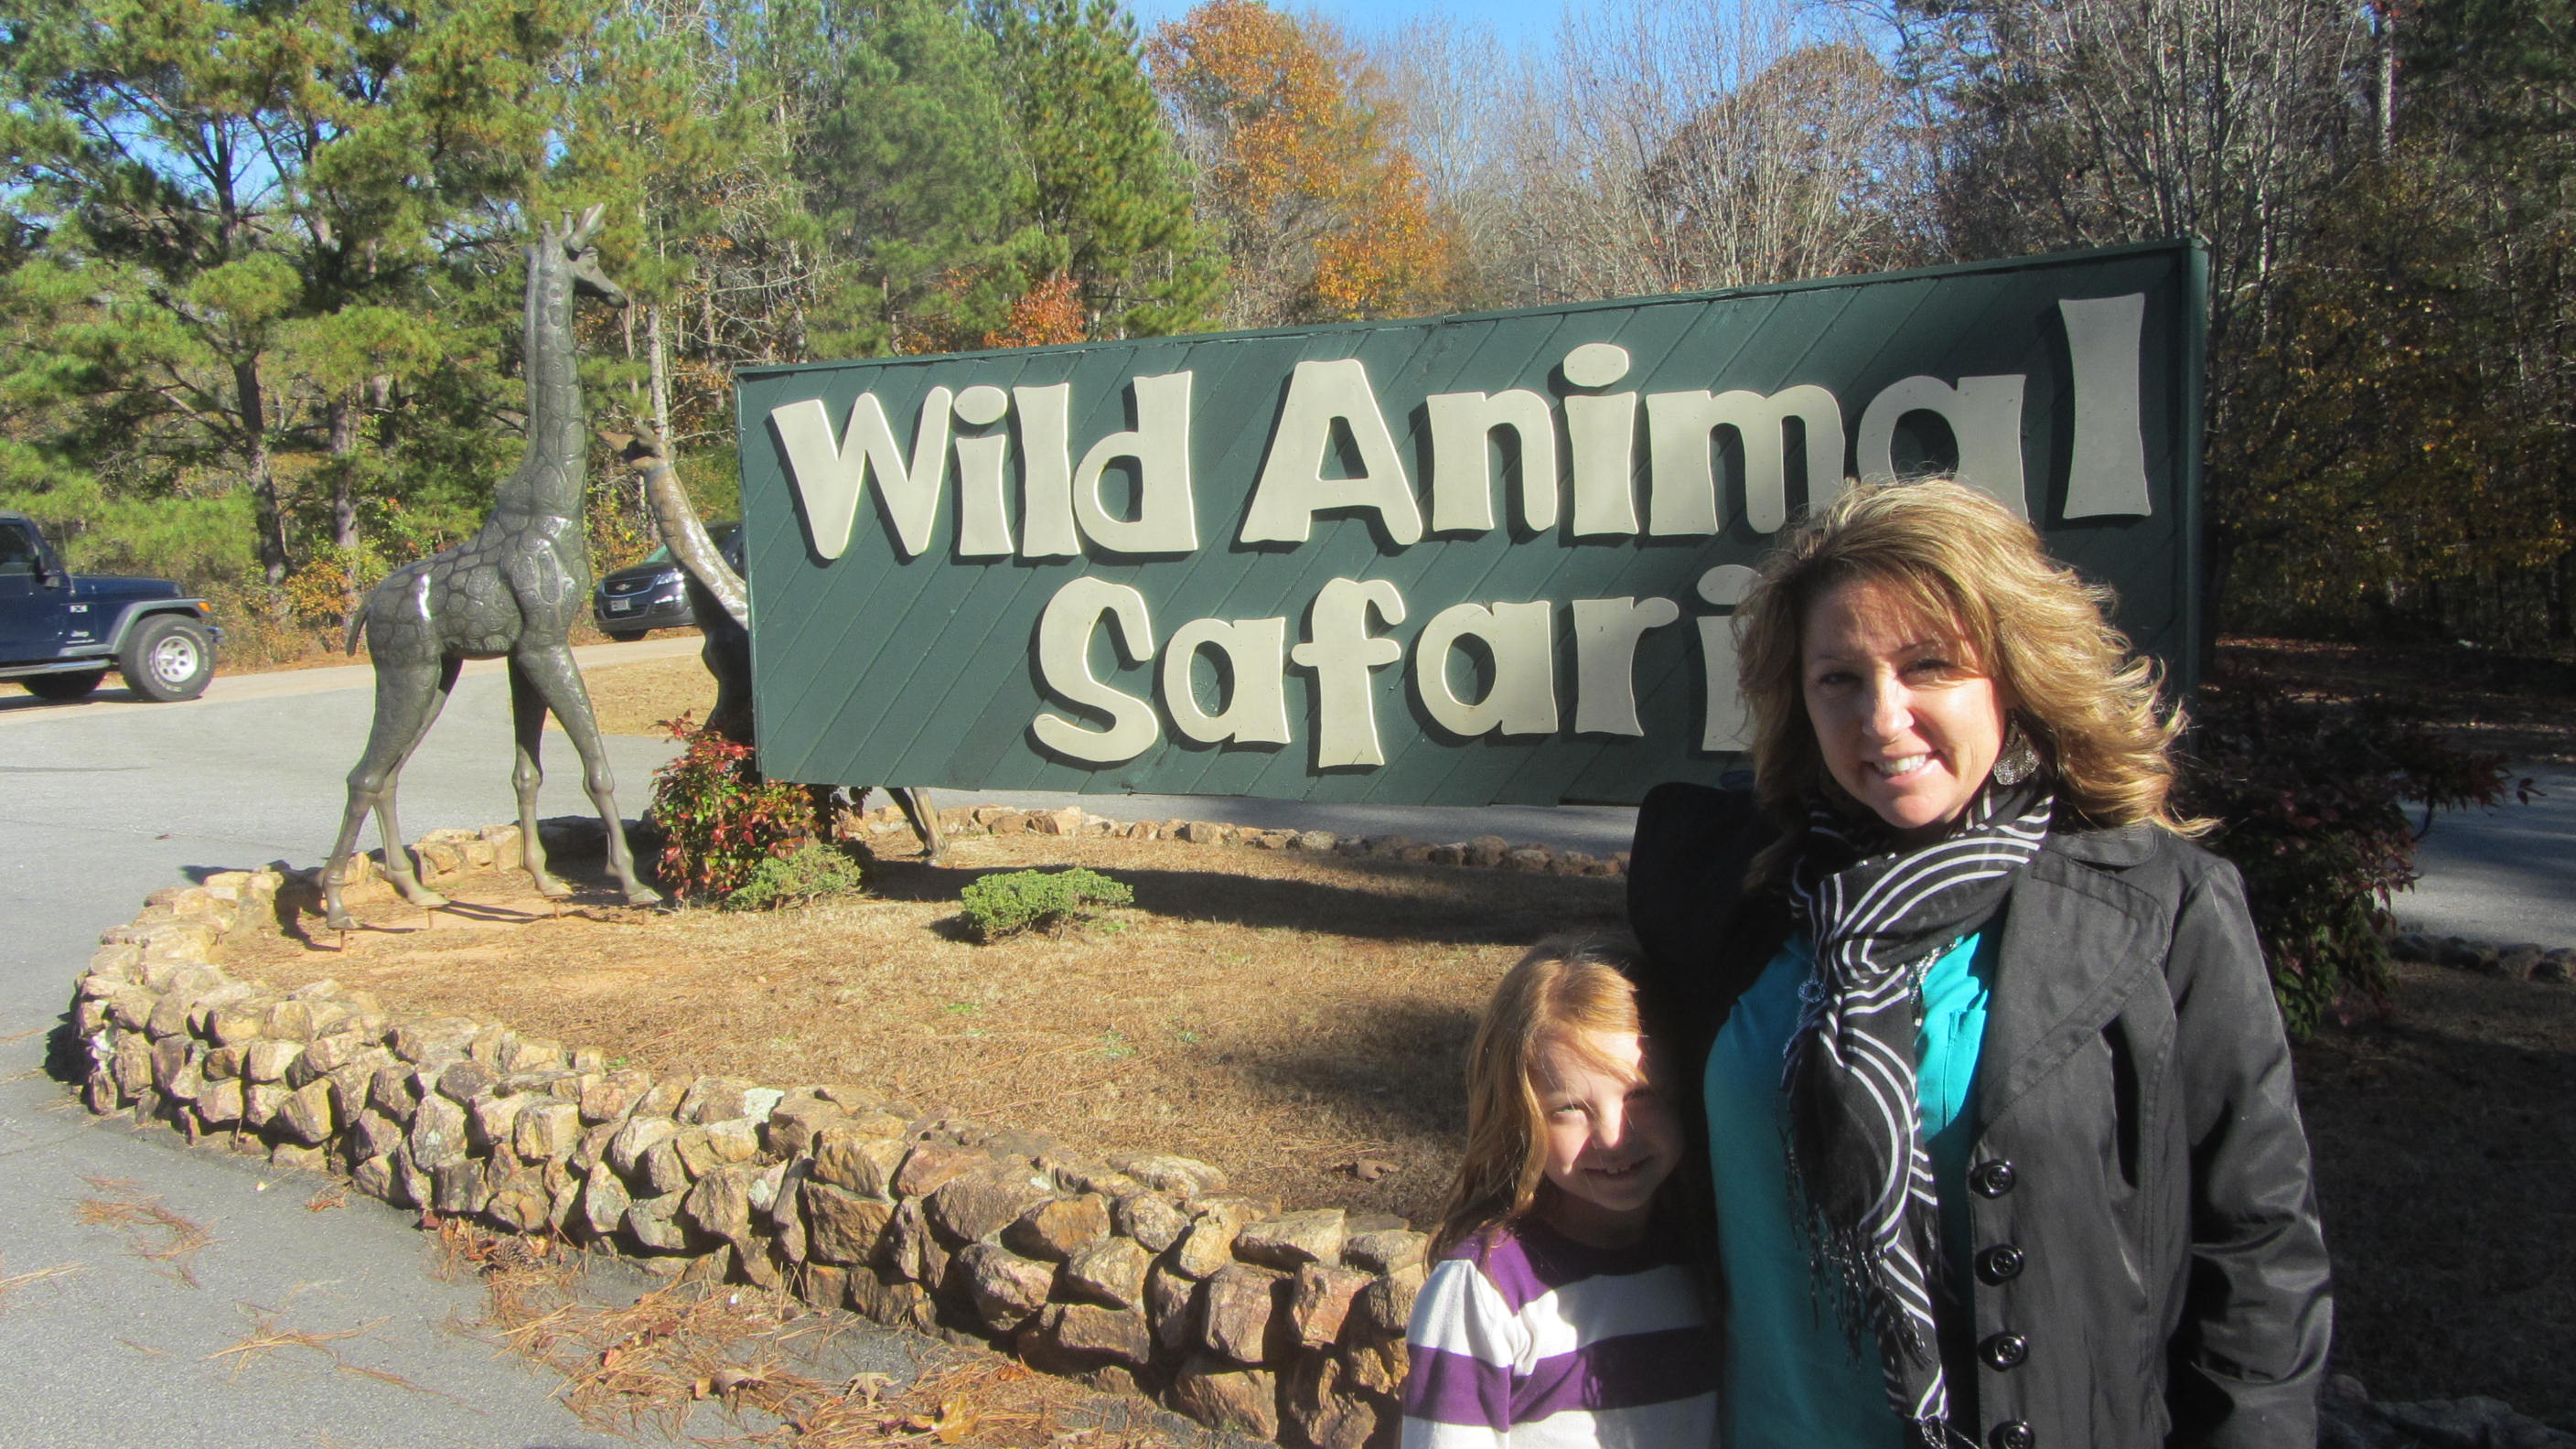 Wild Animal Safari - November 29, 2014